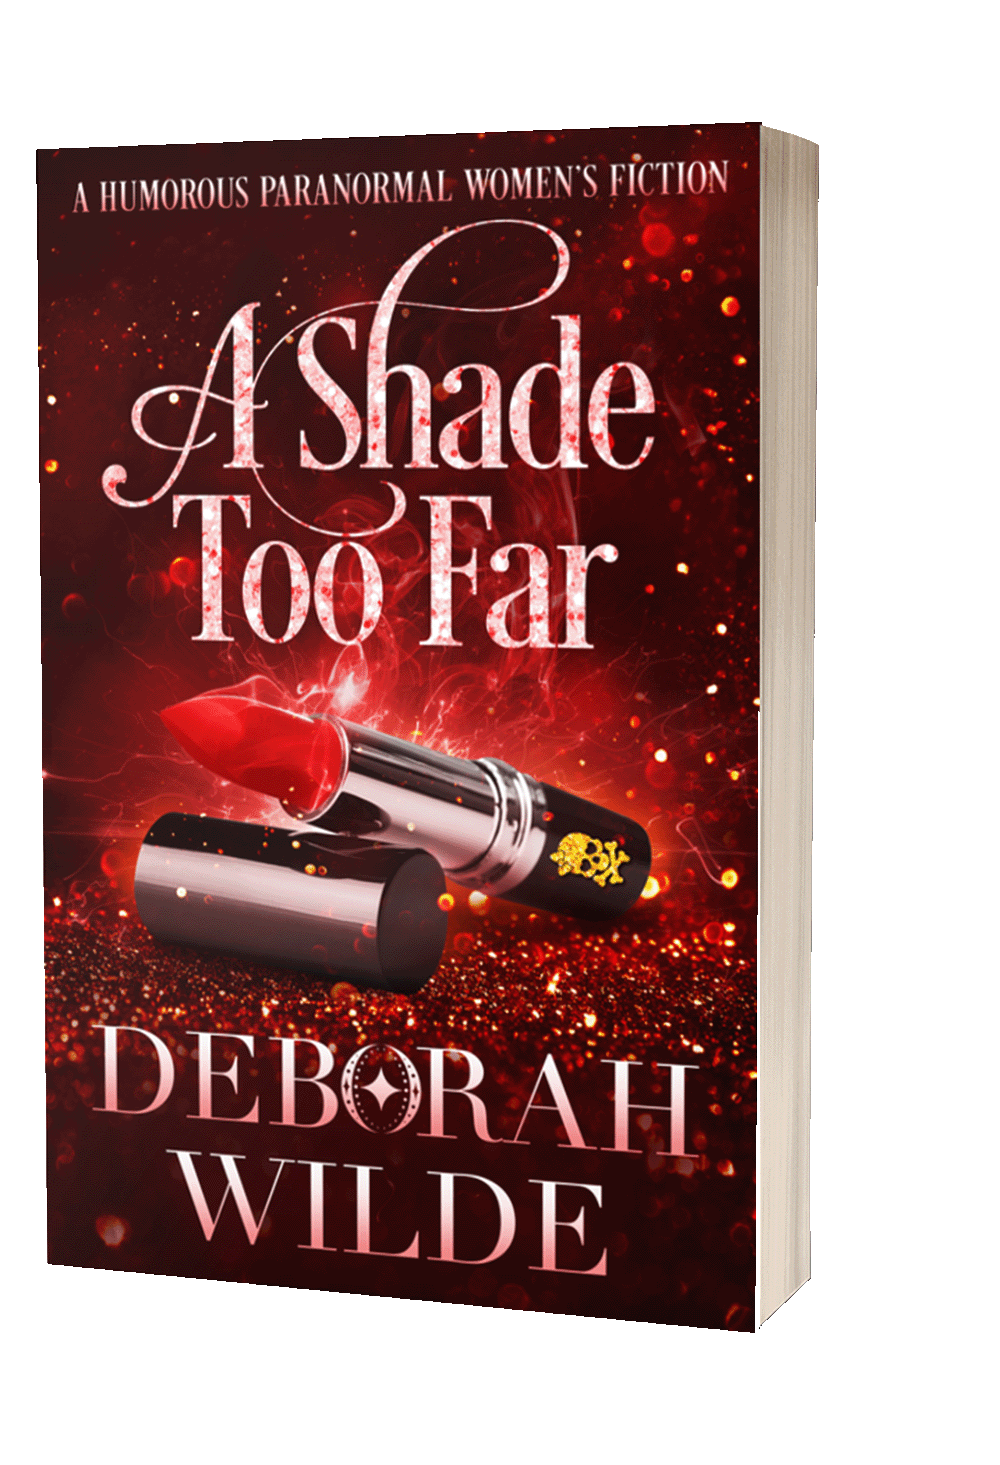 A Shade Too Far (Magic After Midlife #3) Paperback - Deborah Wilde Books - urban fantasy